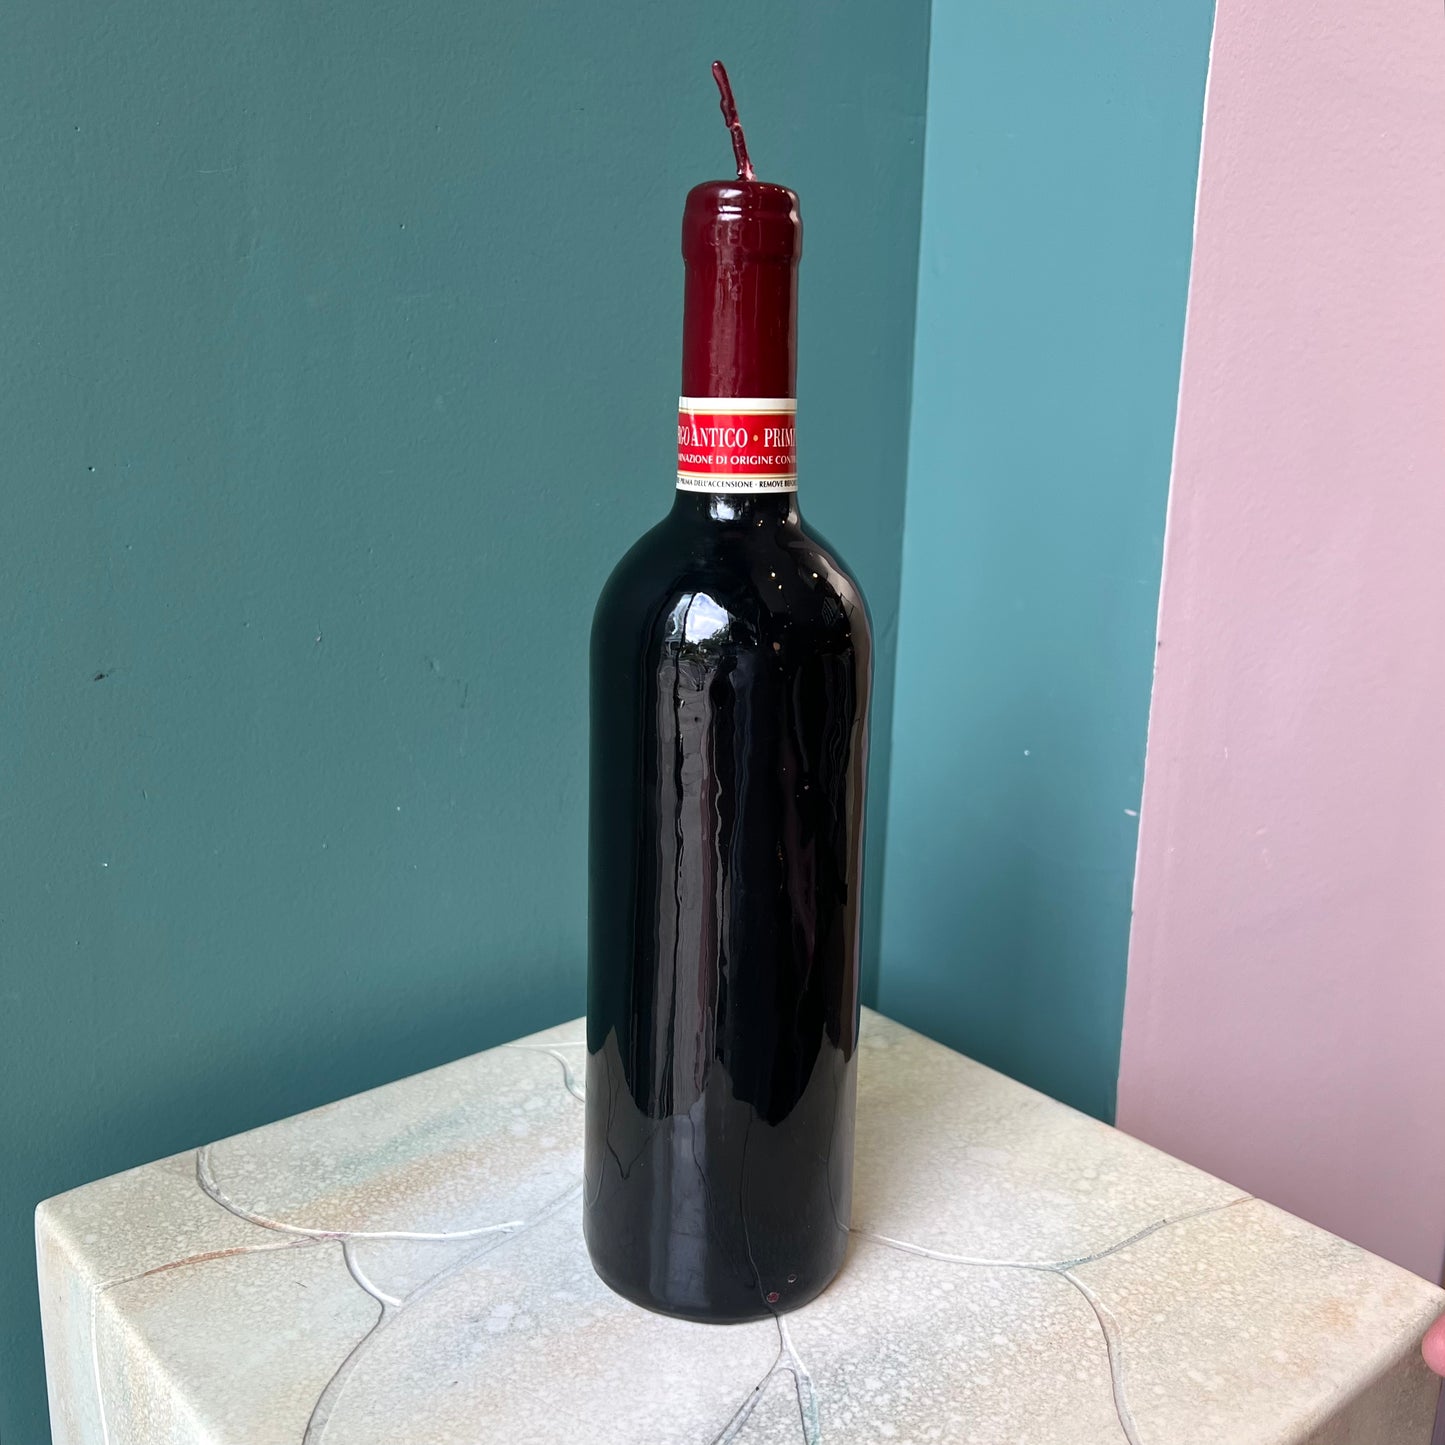 Buon Appetito Wine Bottle Candle